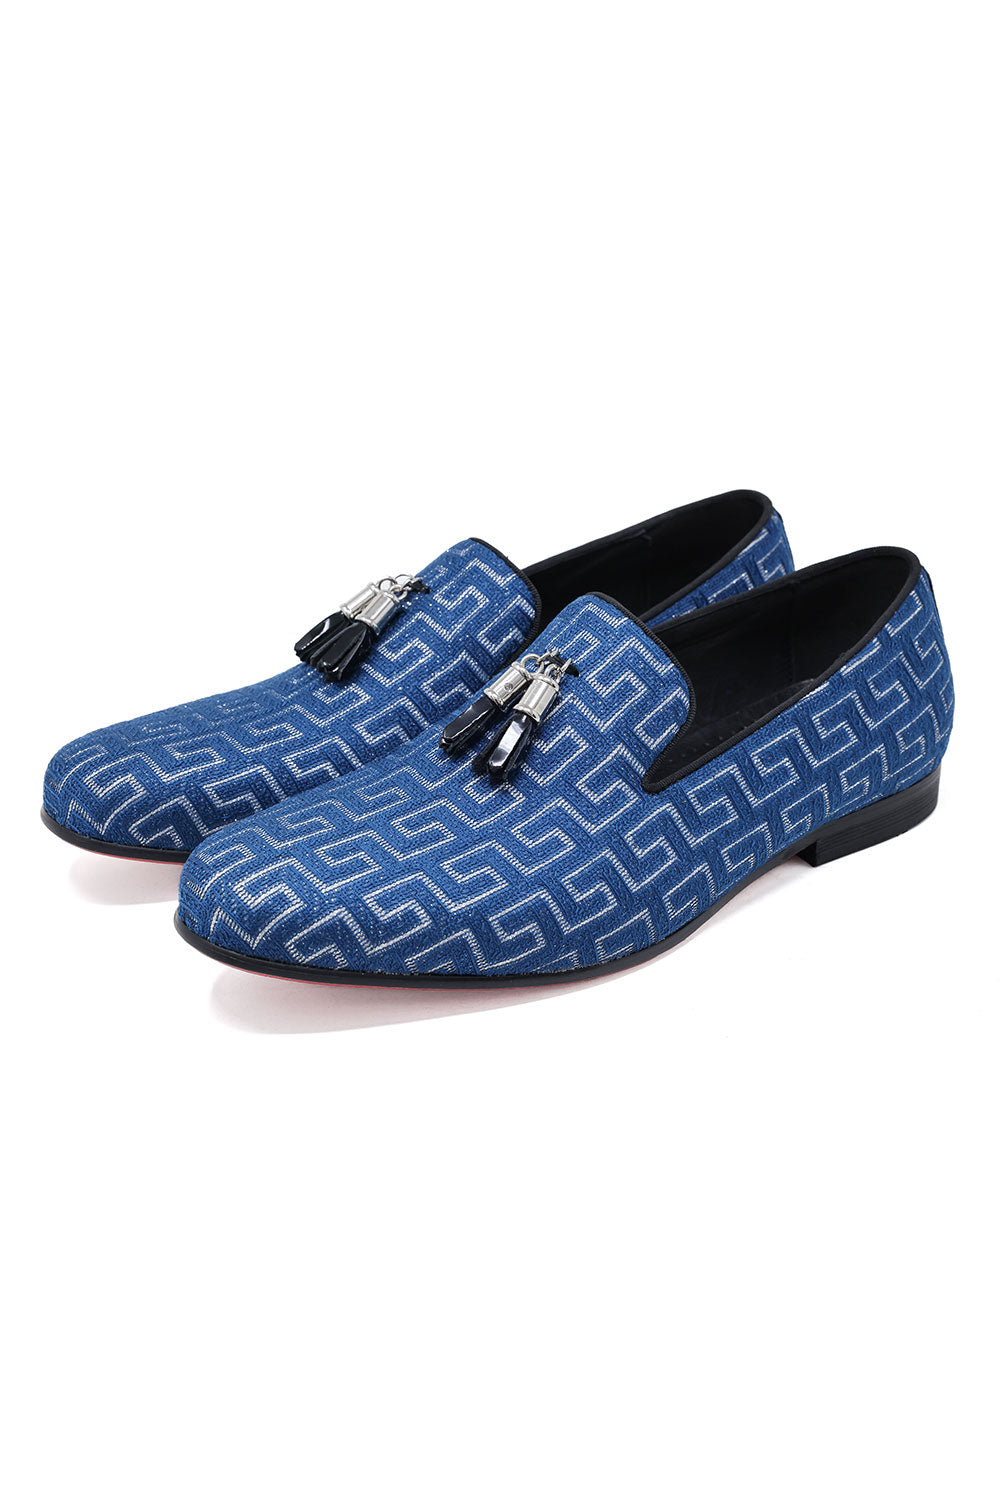 BARABAS Men's Rhinestone Greek key Baroque Tassel Loafer Shoes SH3087